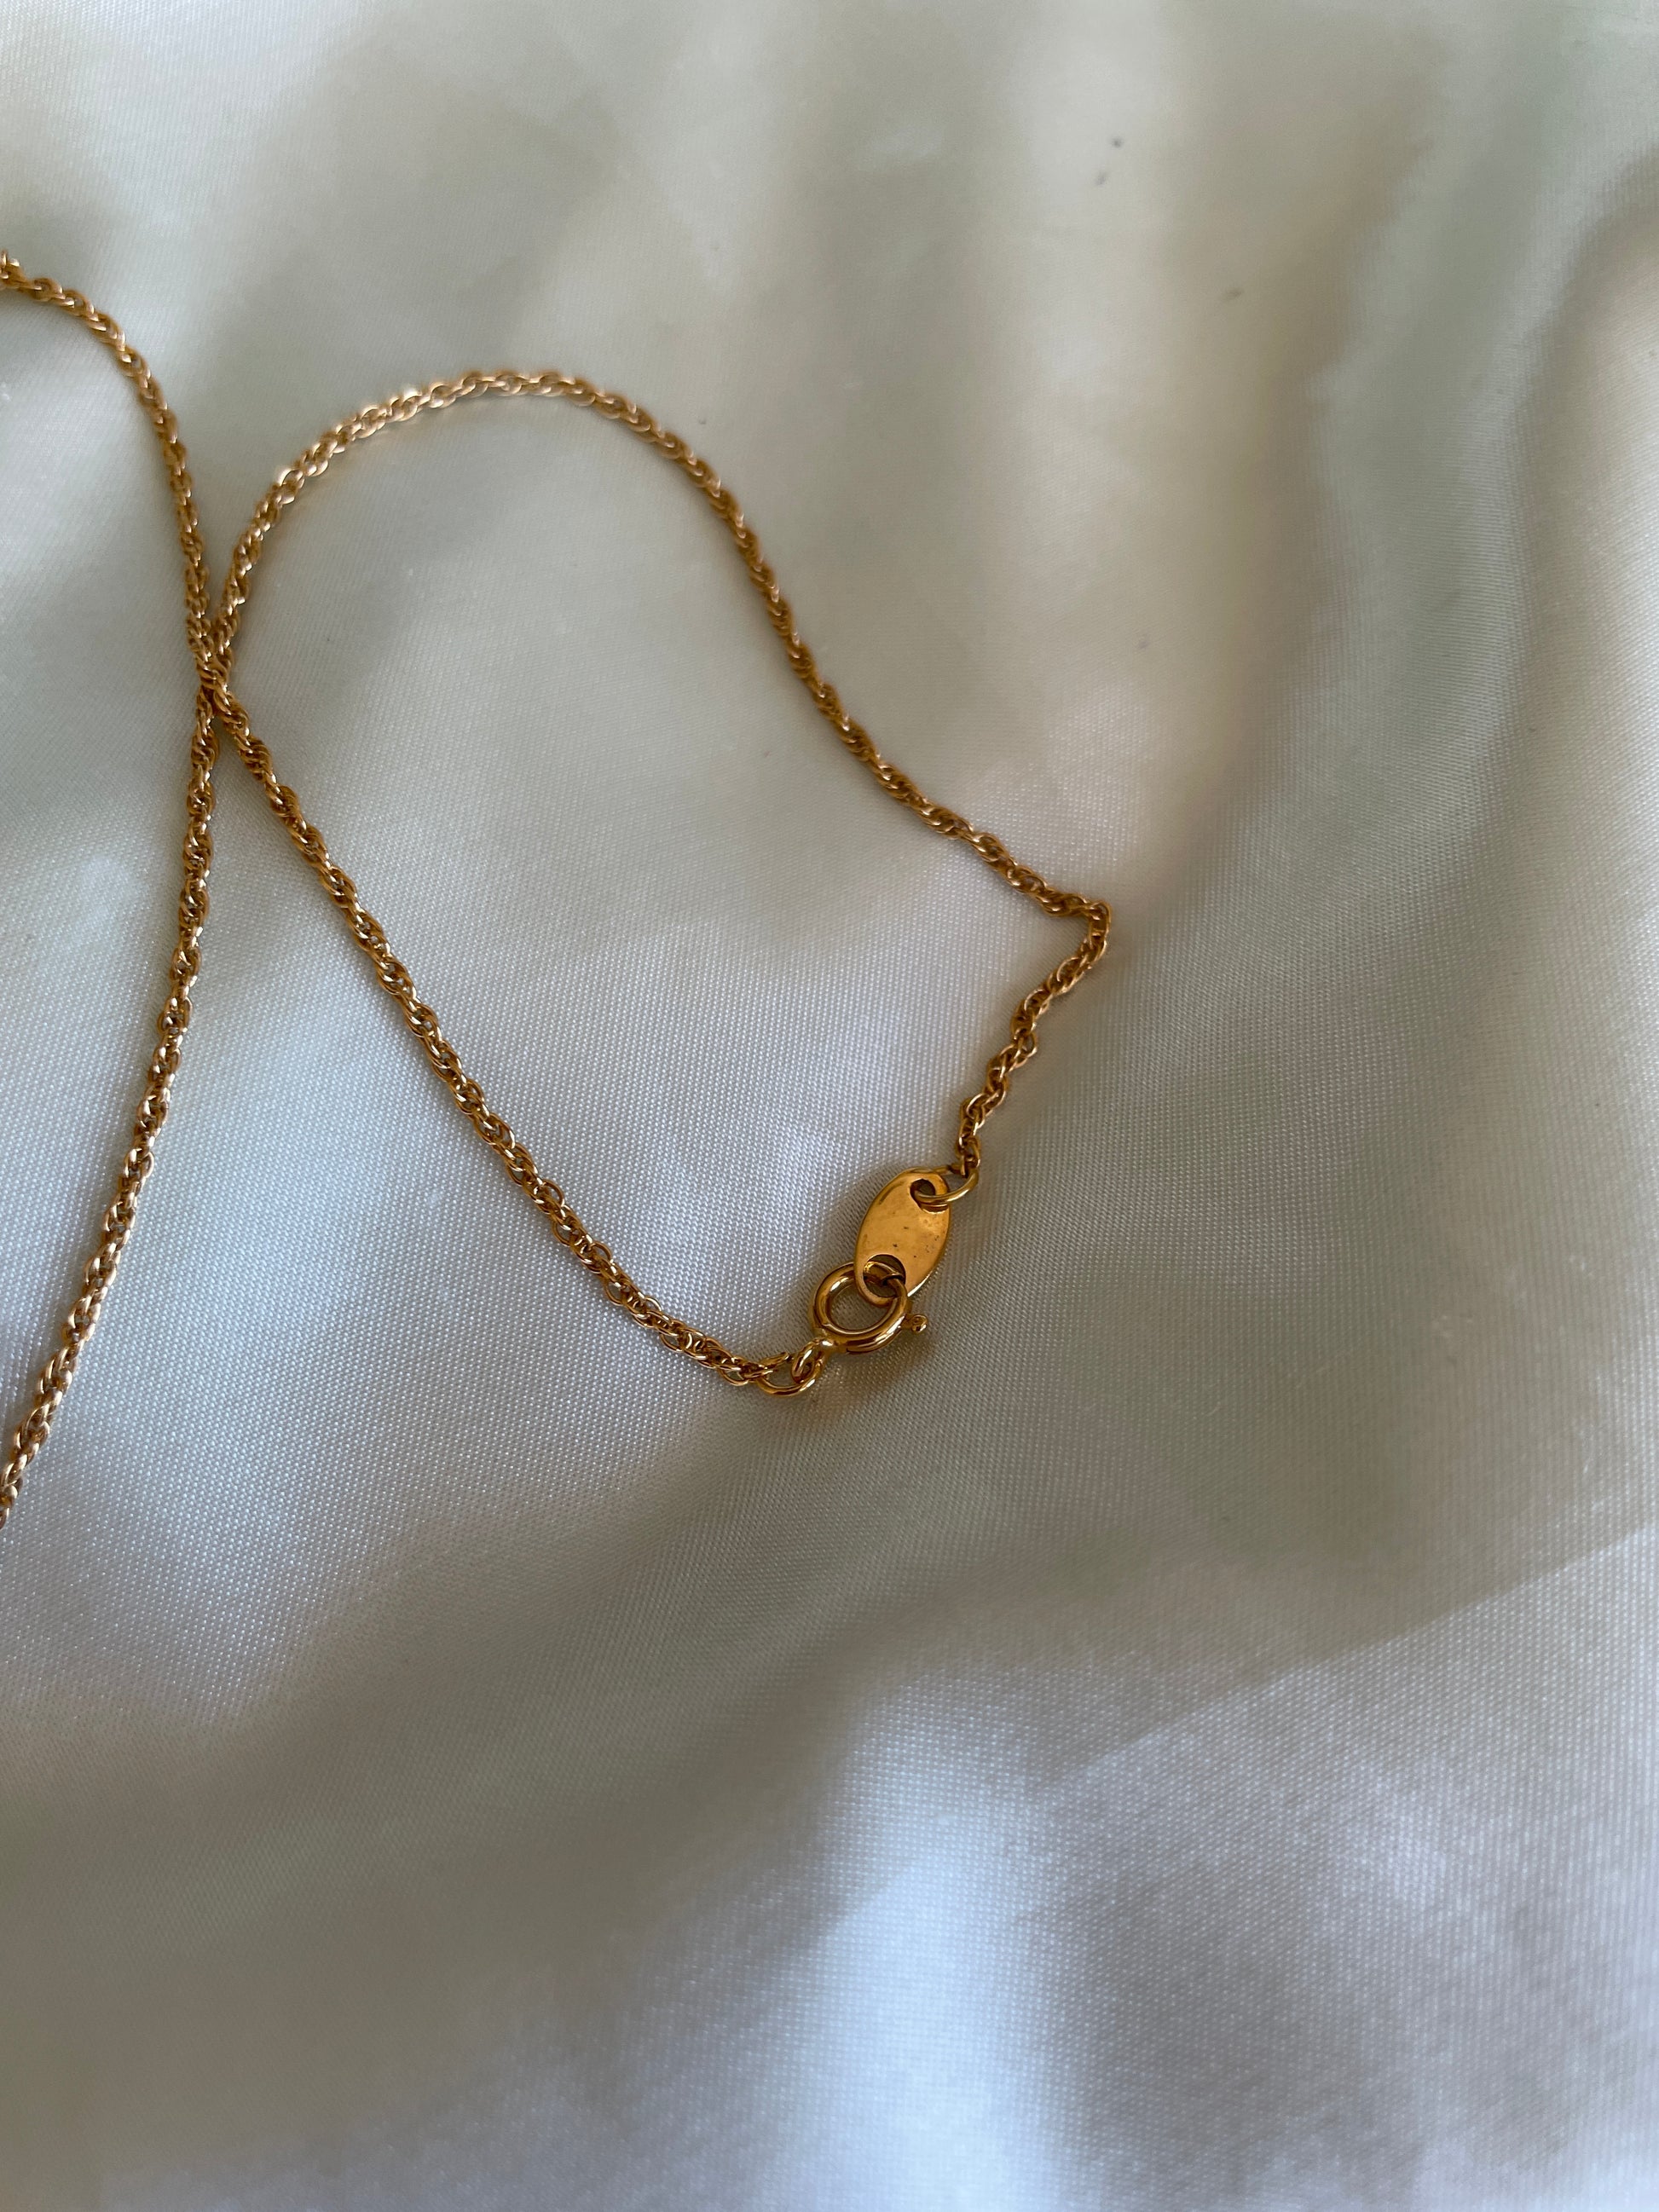  90s Avon Black Glass Crystal Open Heart Pendant Necklace